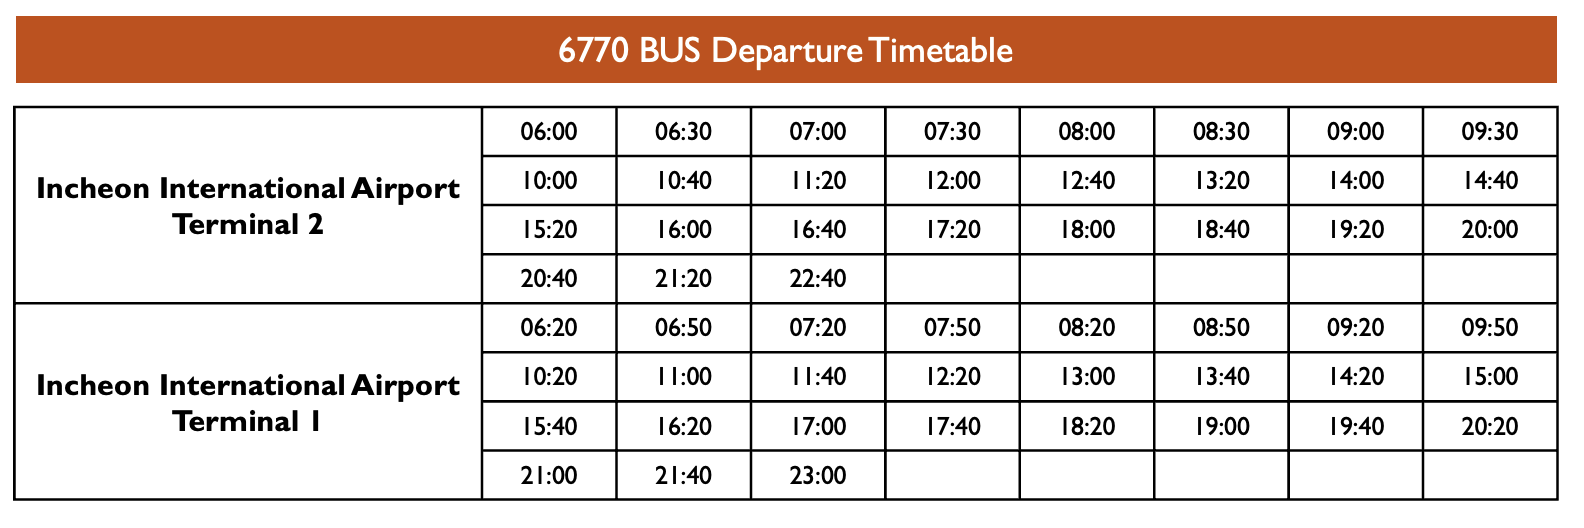 6770 BUS Departure Timetable